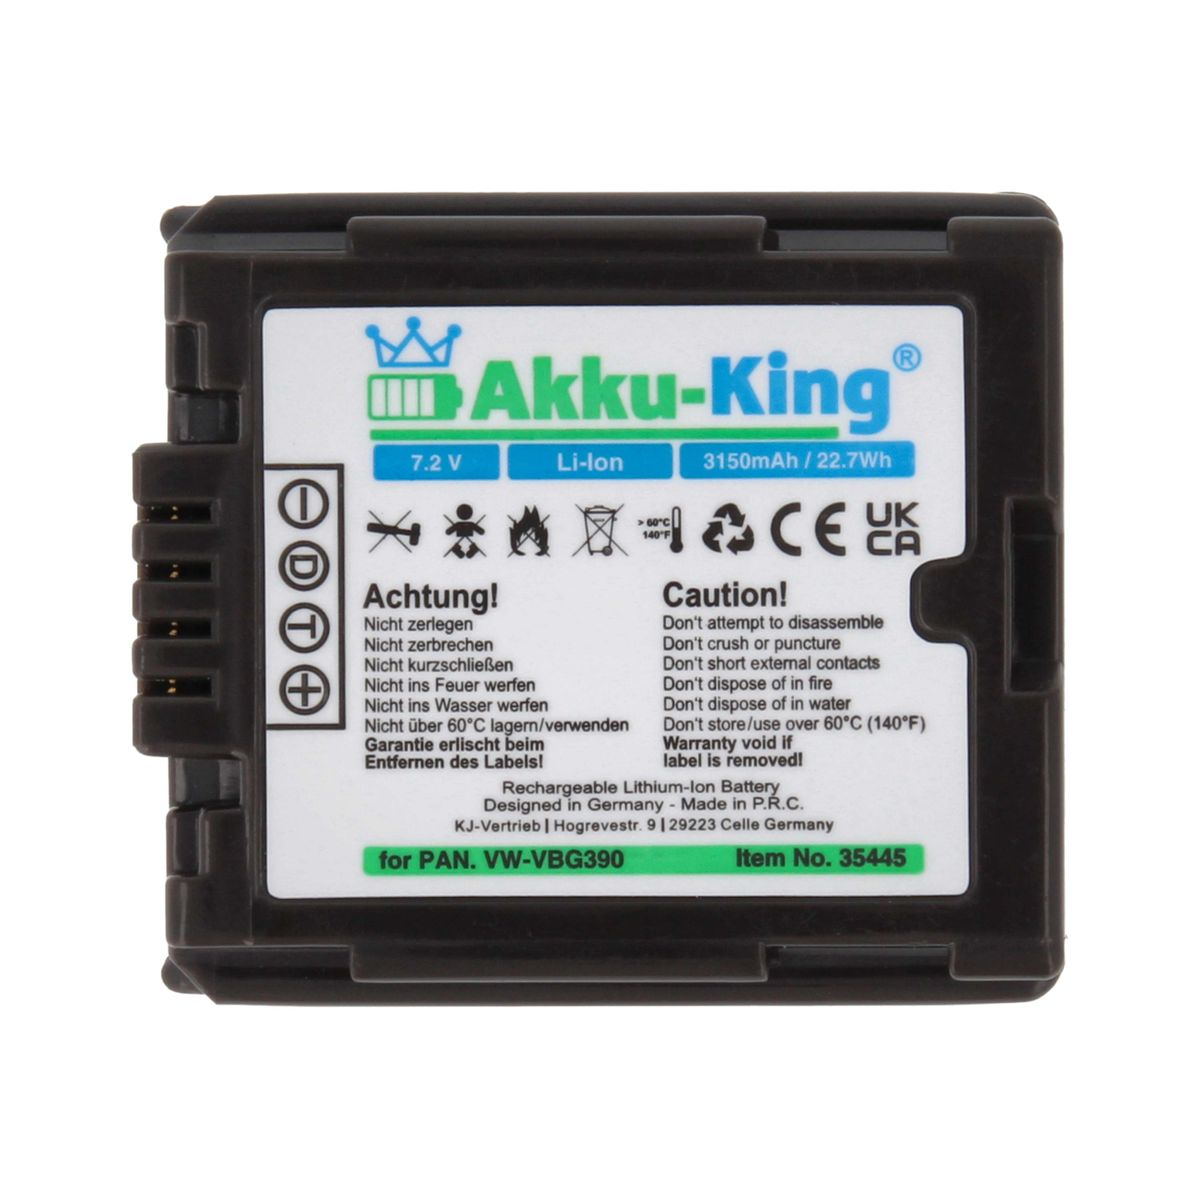 AKKU-KING Akku kompatibel Volt, 3150mAh mit Kamera-Akku, Li-Ion Panasonic 7.4 VW-VBG390PP